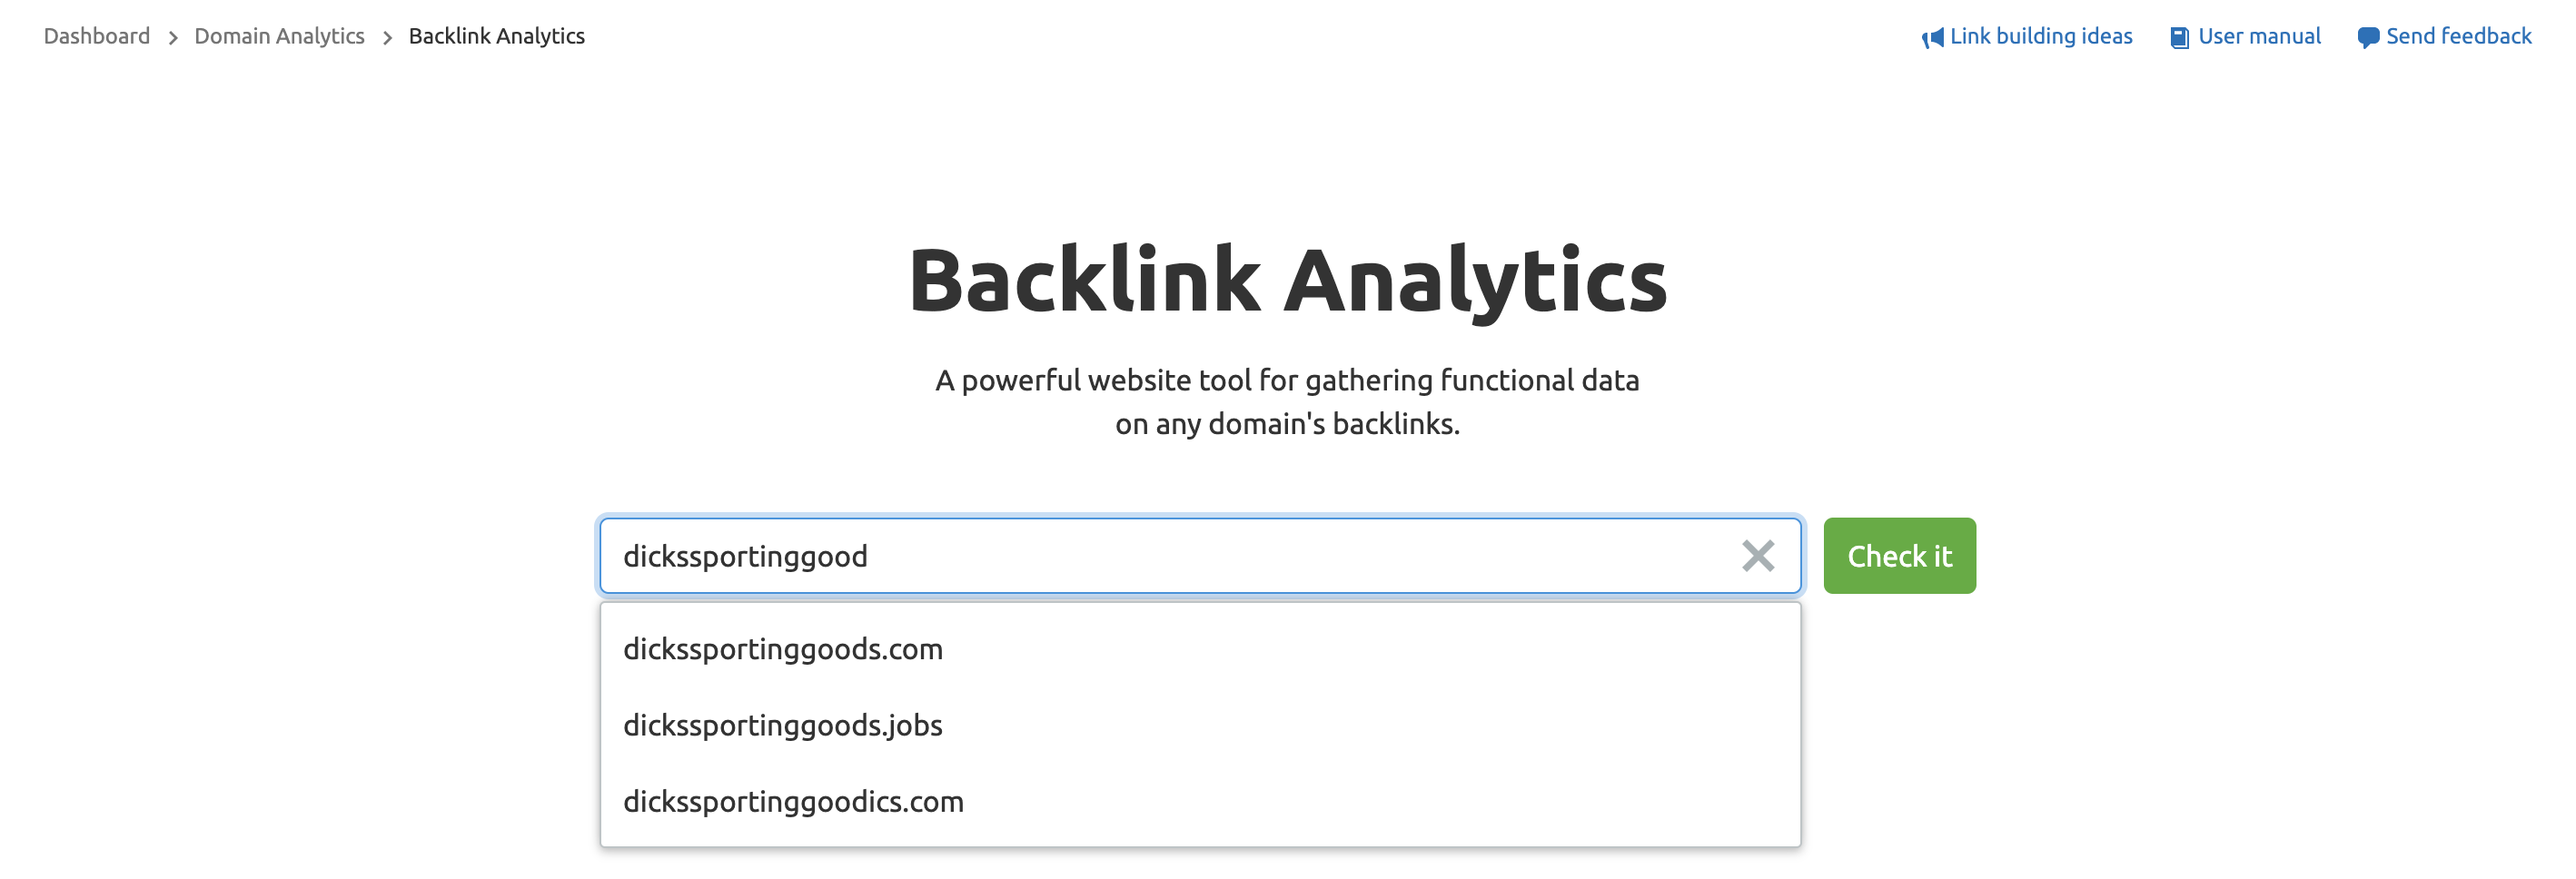 Backlink Analytics Enter Domain screenshot